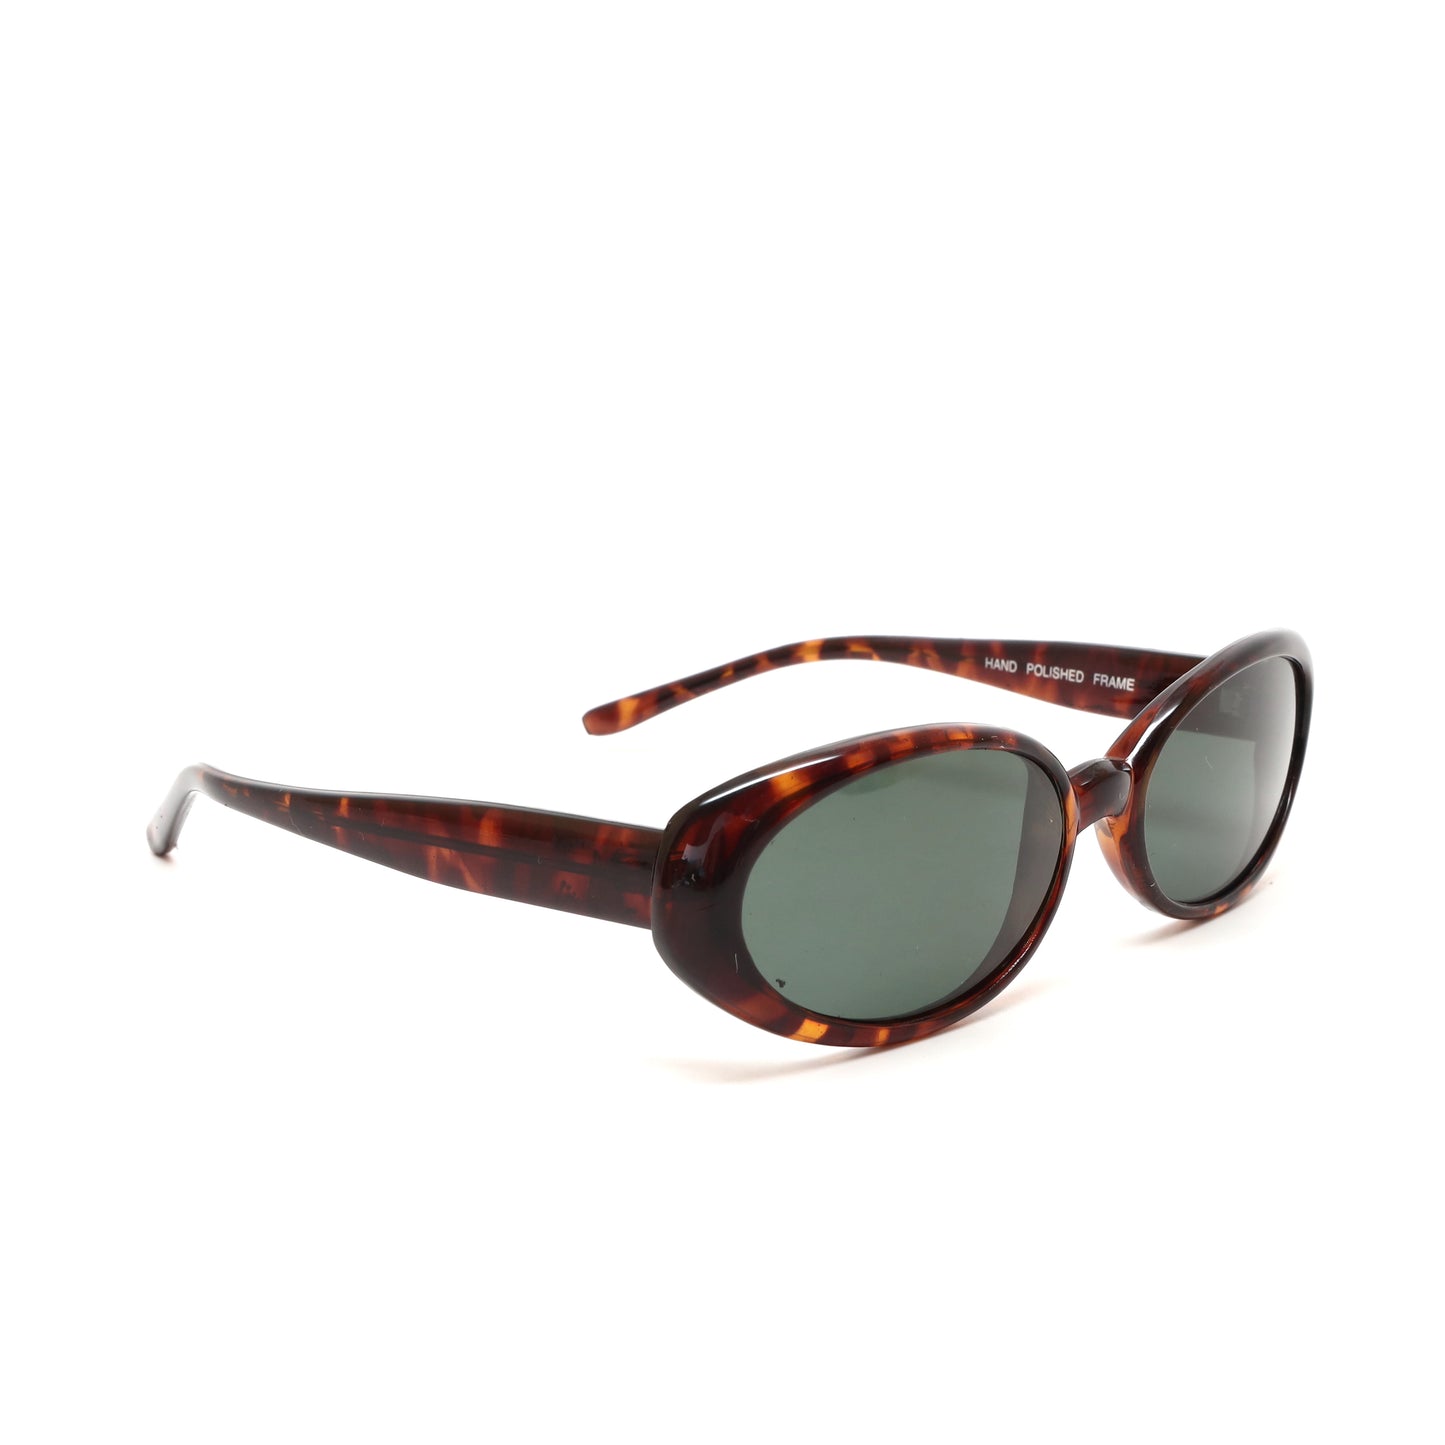 Vintage Standard Size 90s Mod Jane Oval Sunglasses - Tortoise